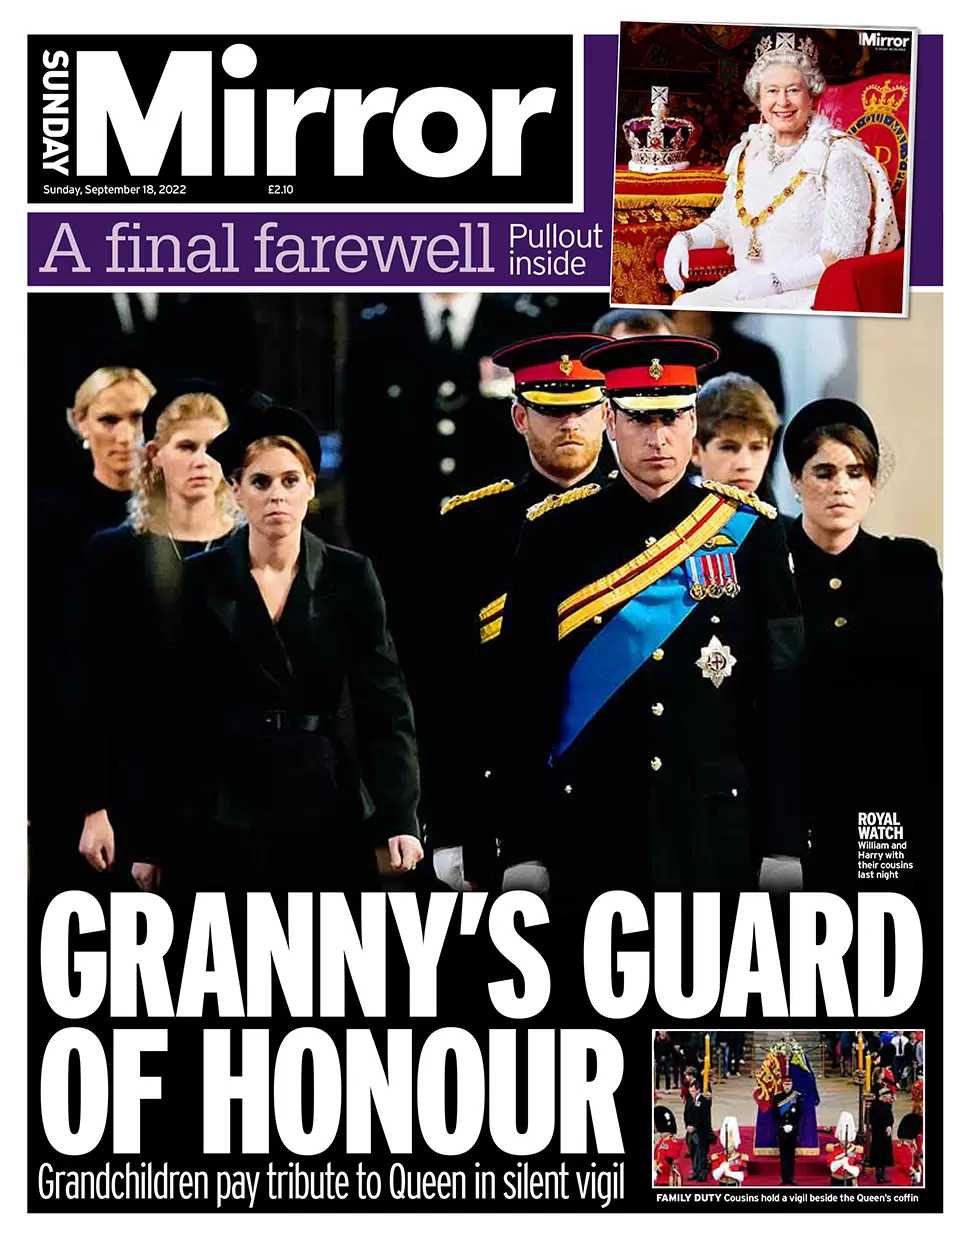 Sunday Mirror - Granny’s guard of honour 